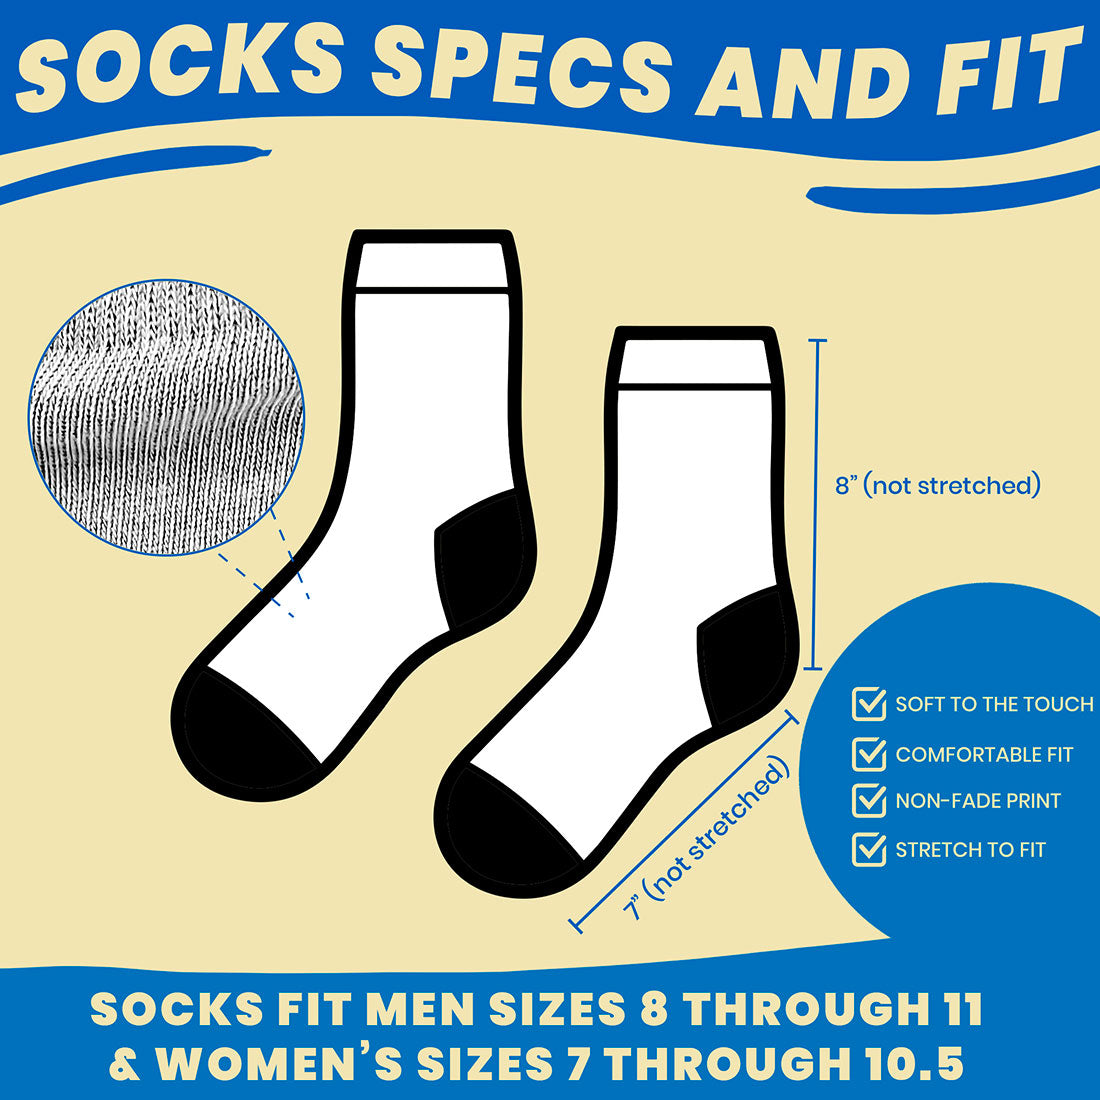 Customized Socks